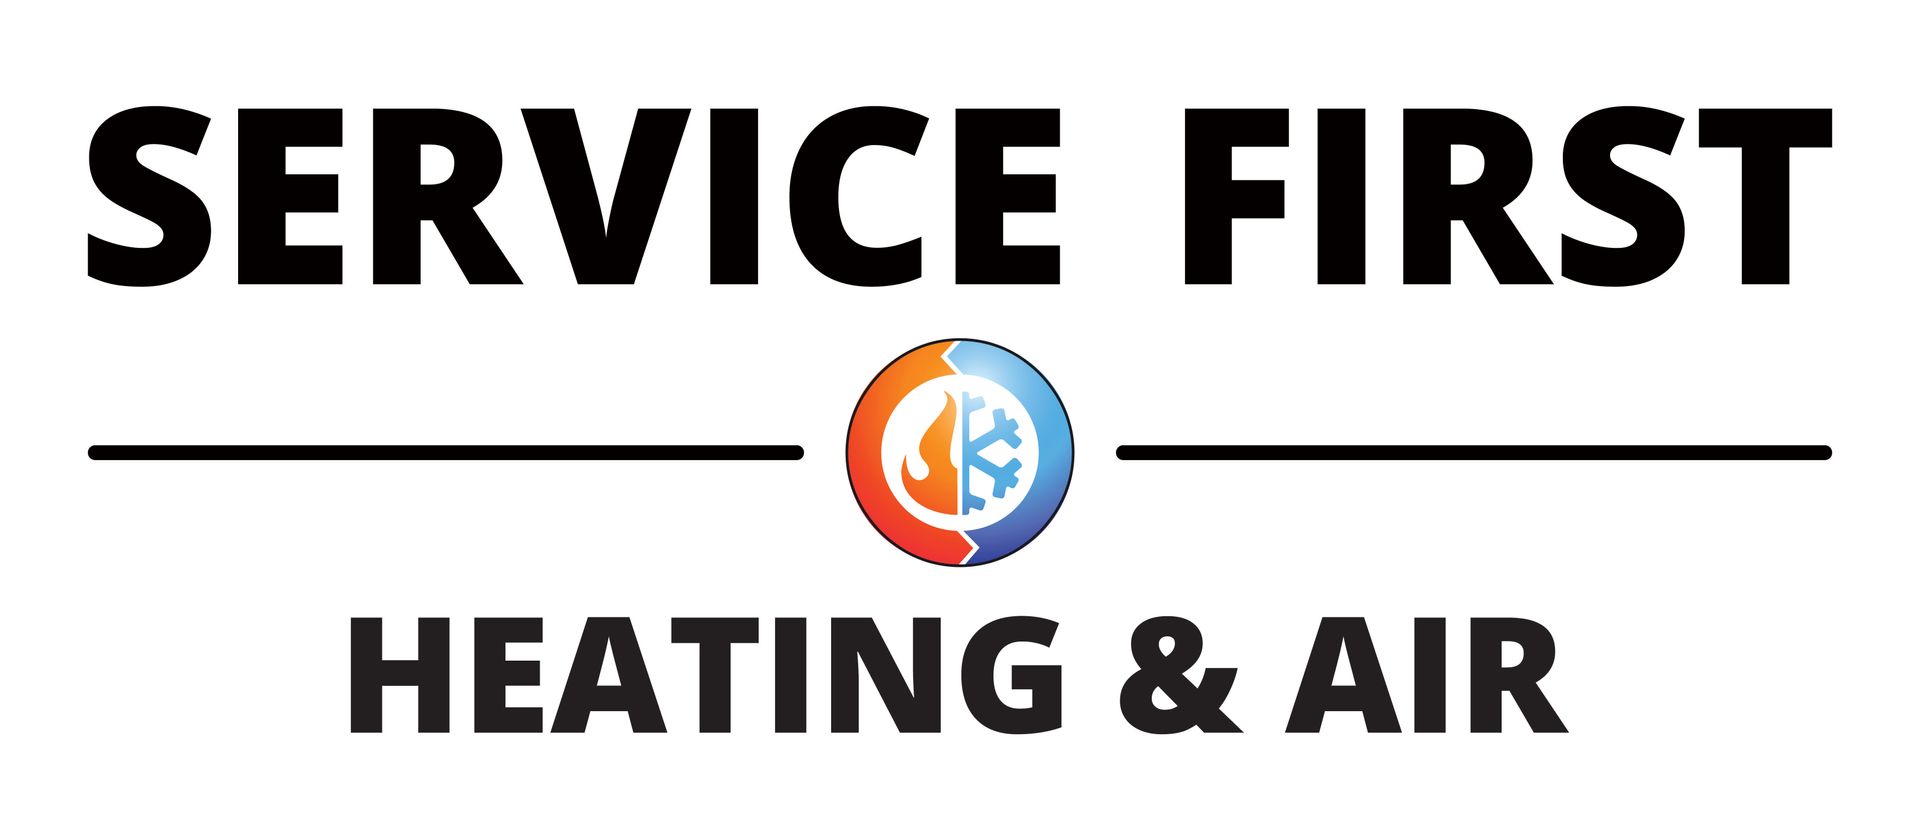 Service First Heating & Air - Logo